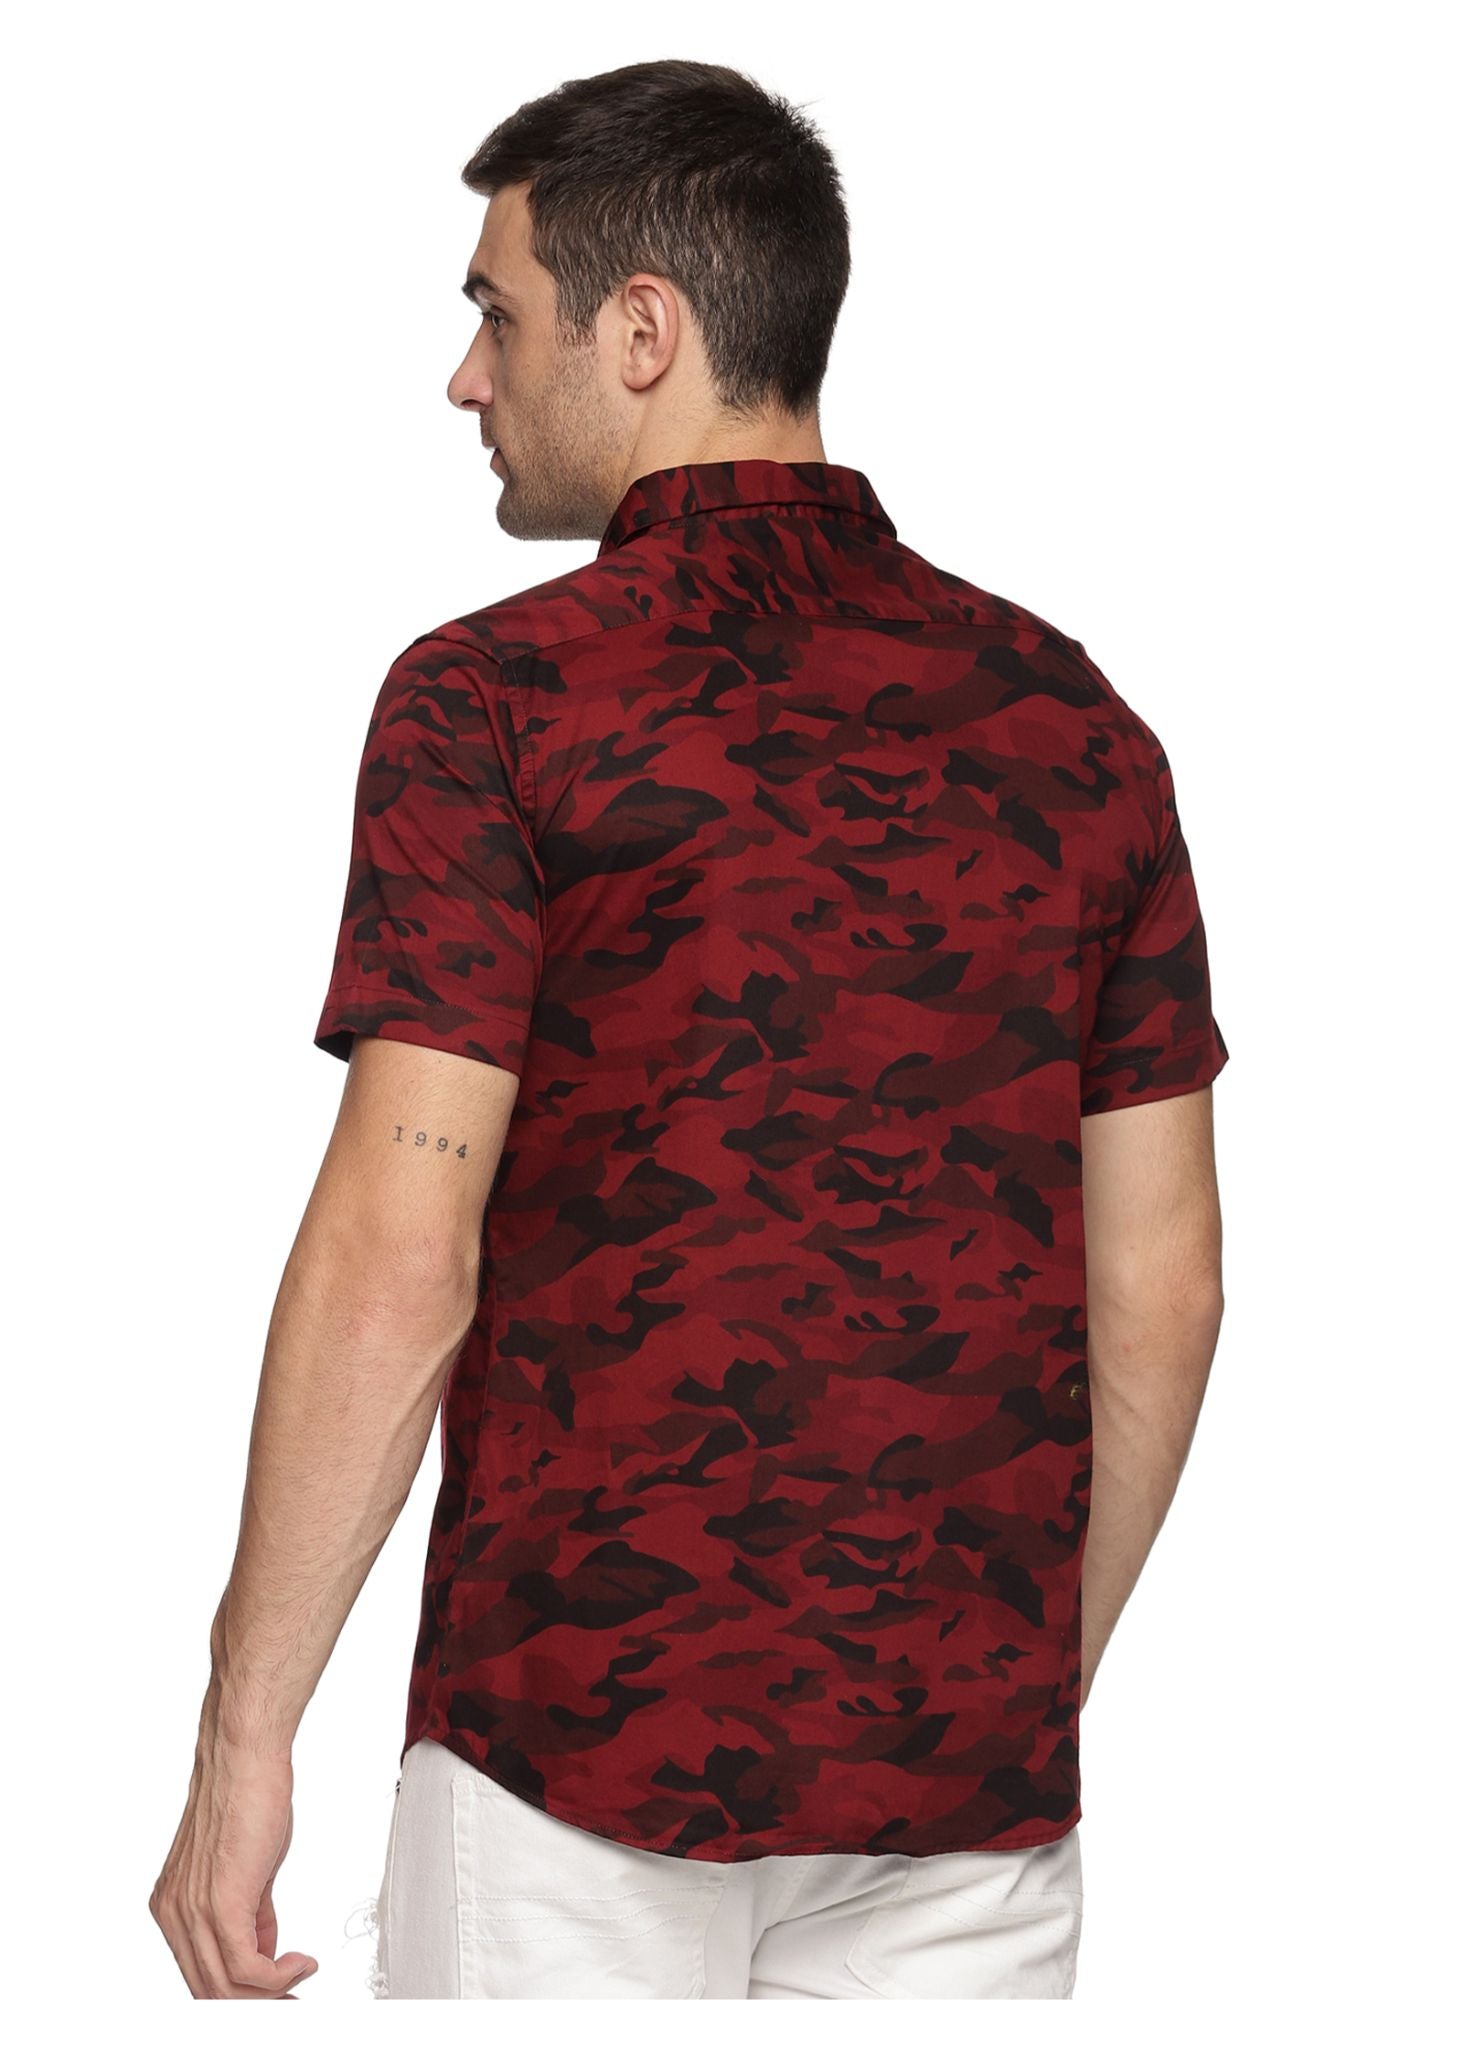 Maroon Camouflage Printed Shirt - Tusok